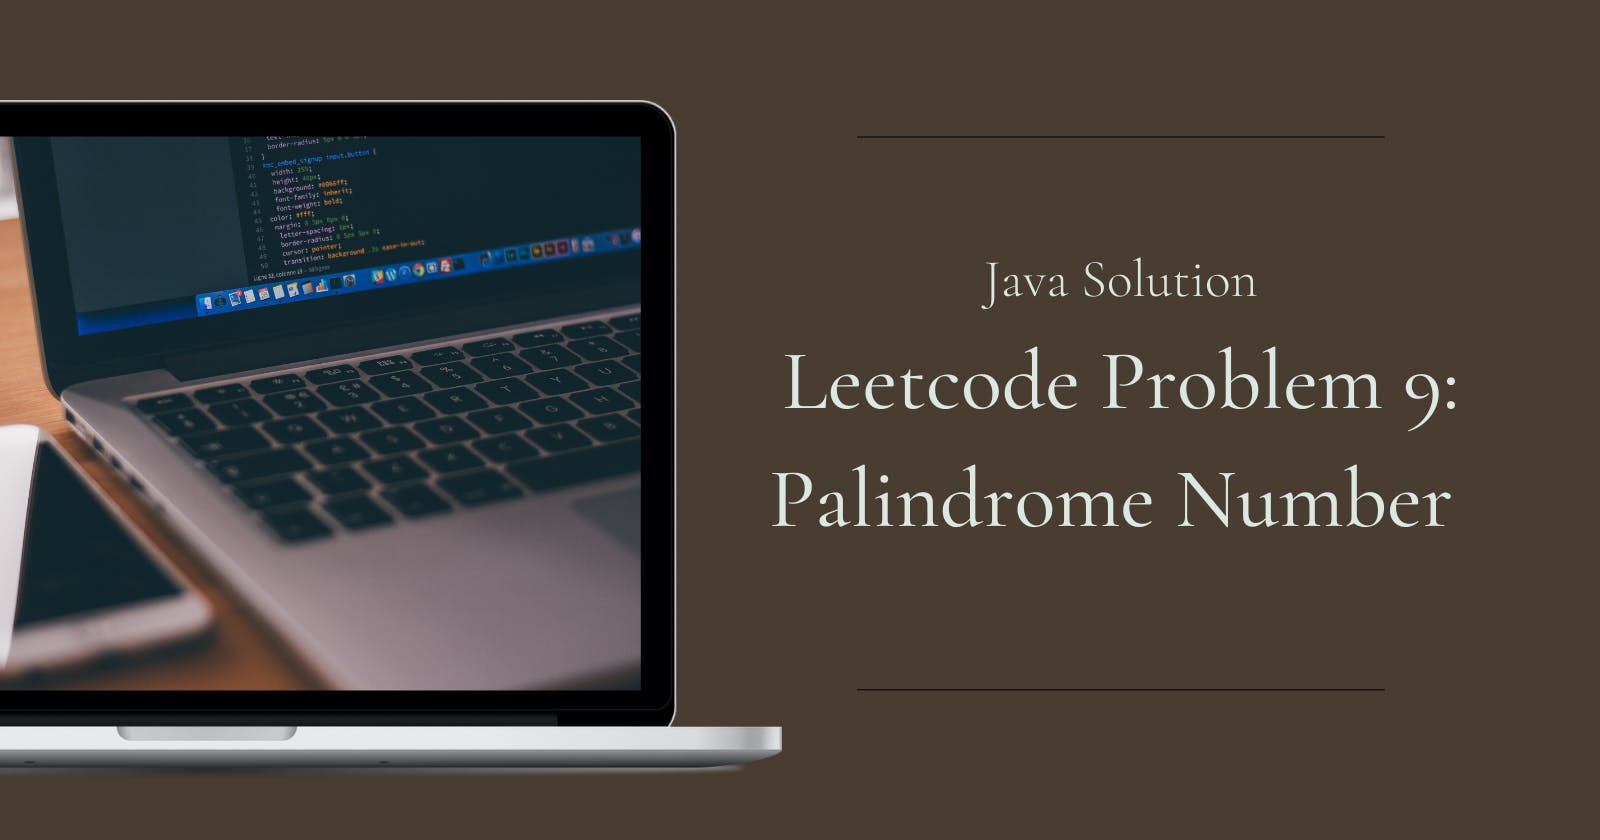 Java Solution - LeetCode Problem 9 Palindrome Number